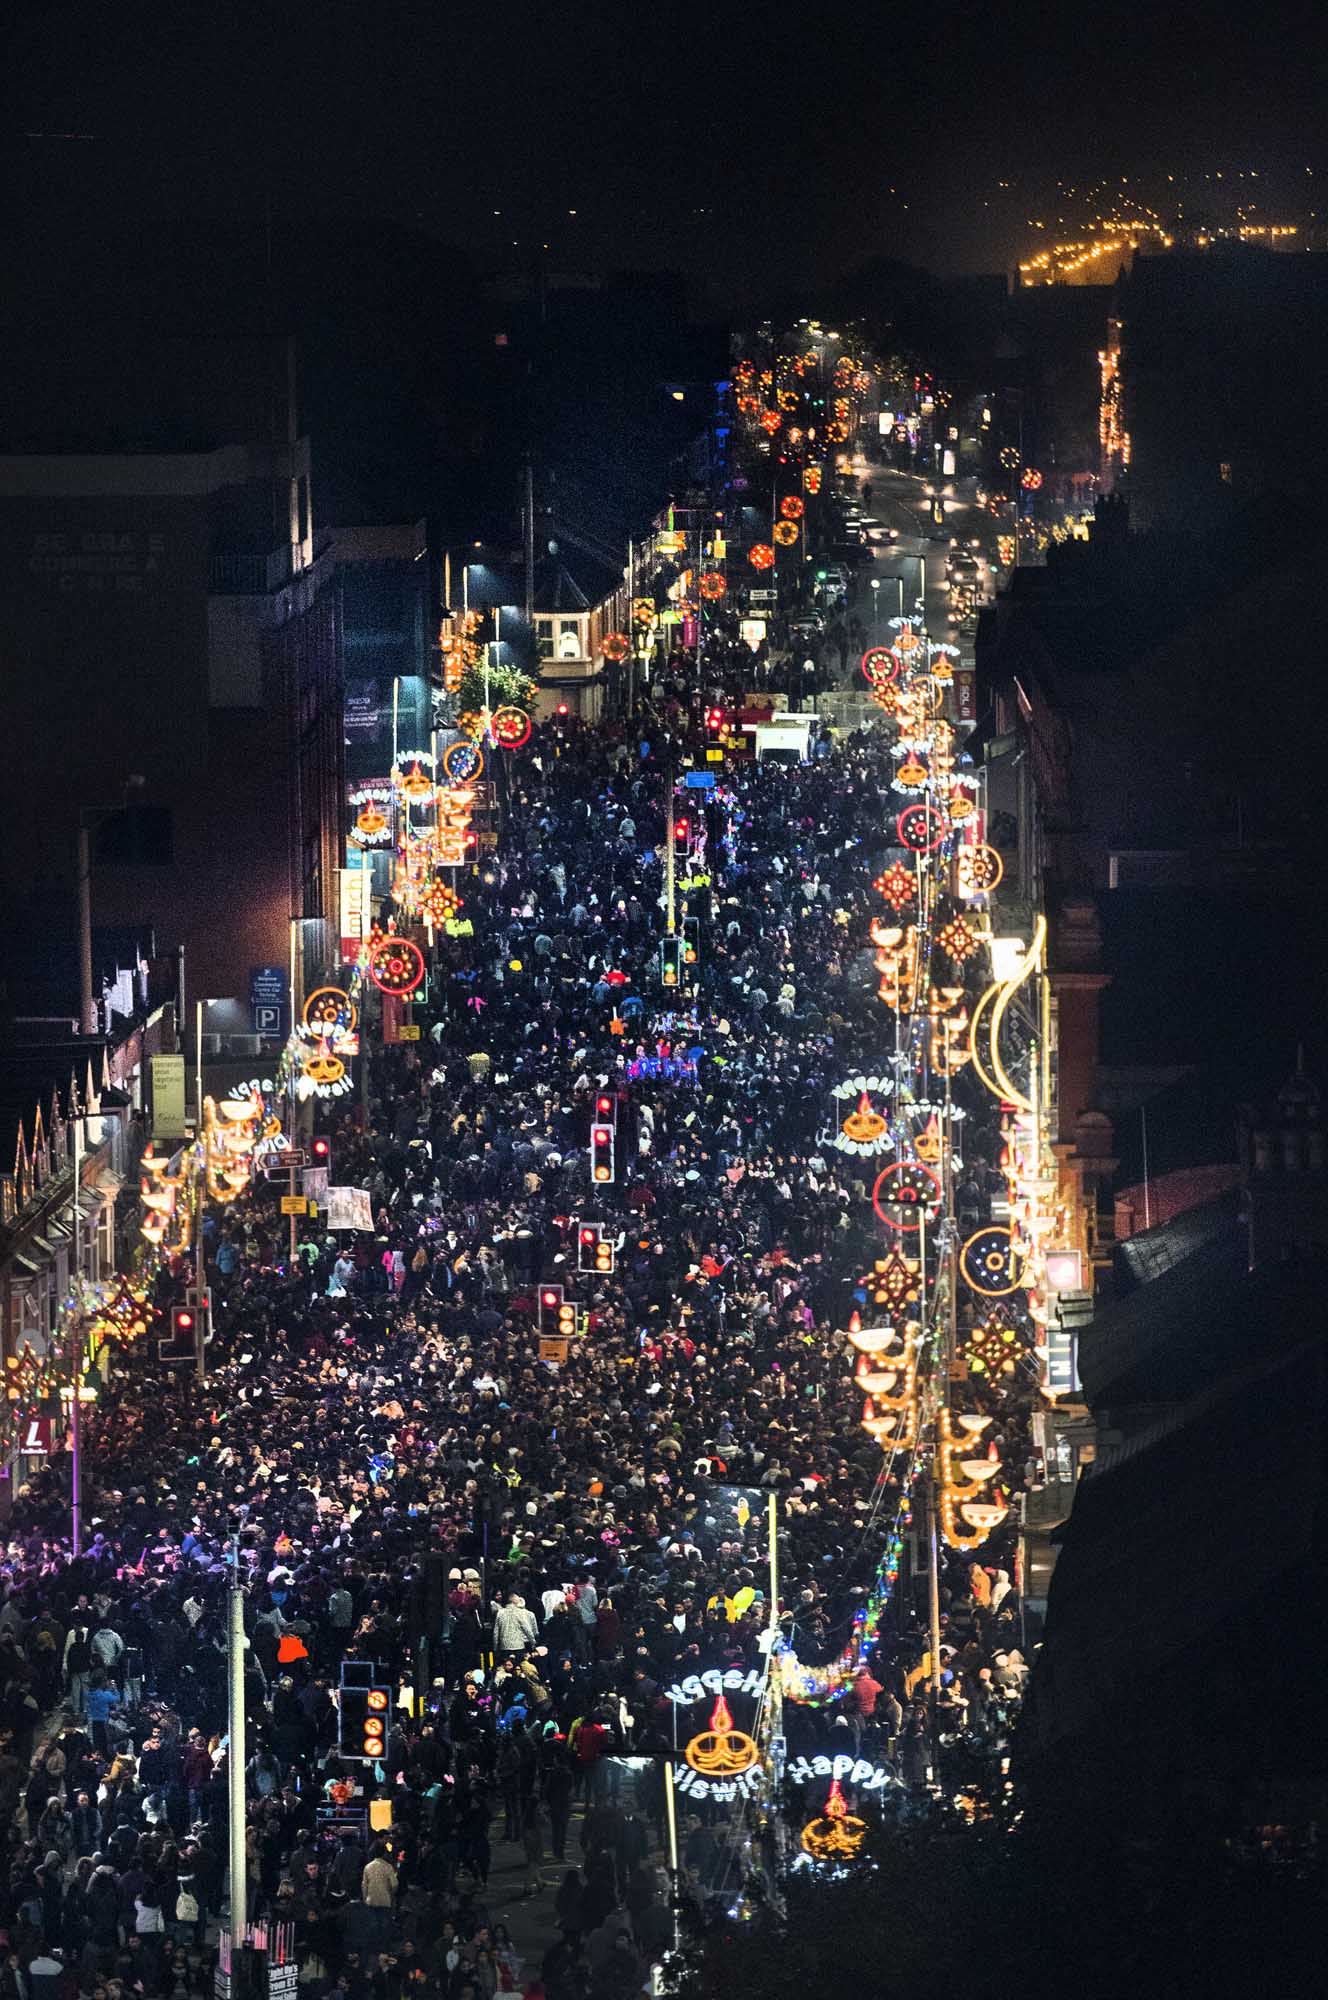 Huge crowds at the Diwali celebrations in 2015 -